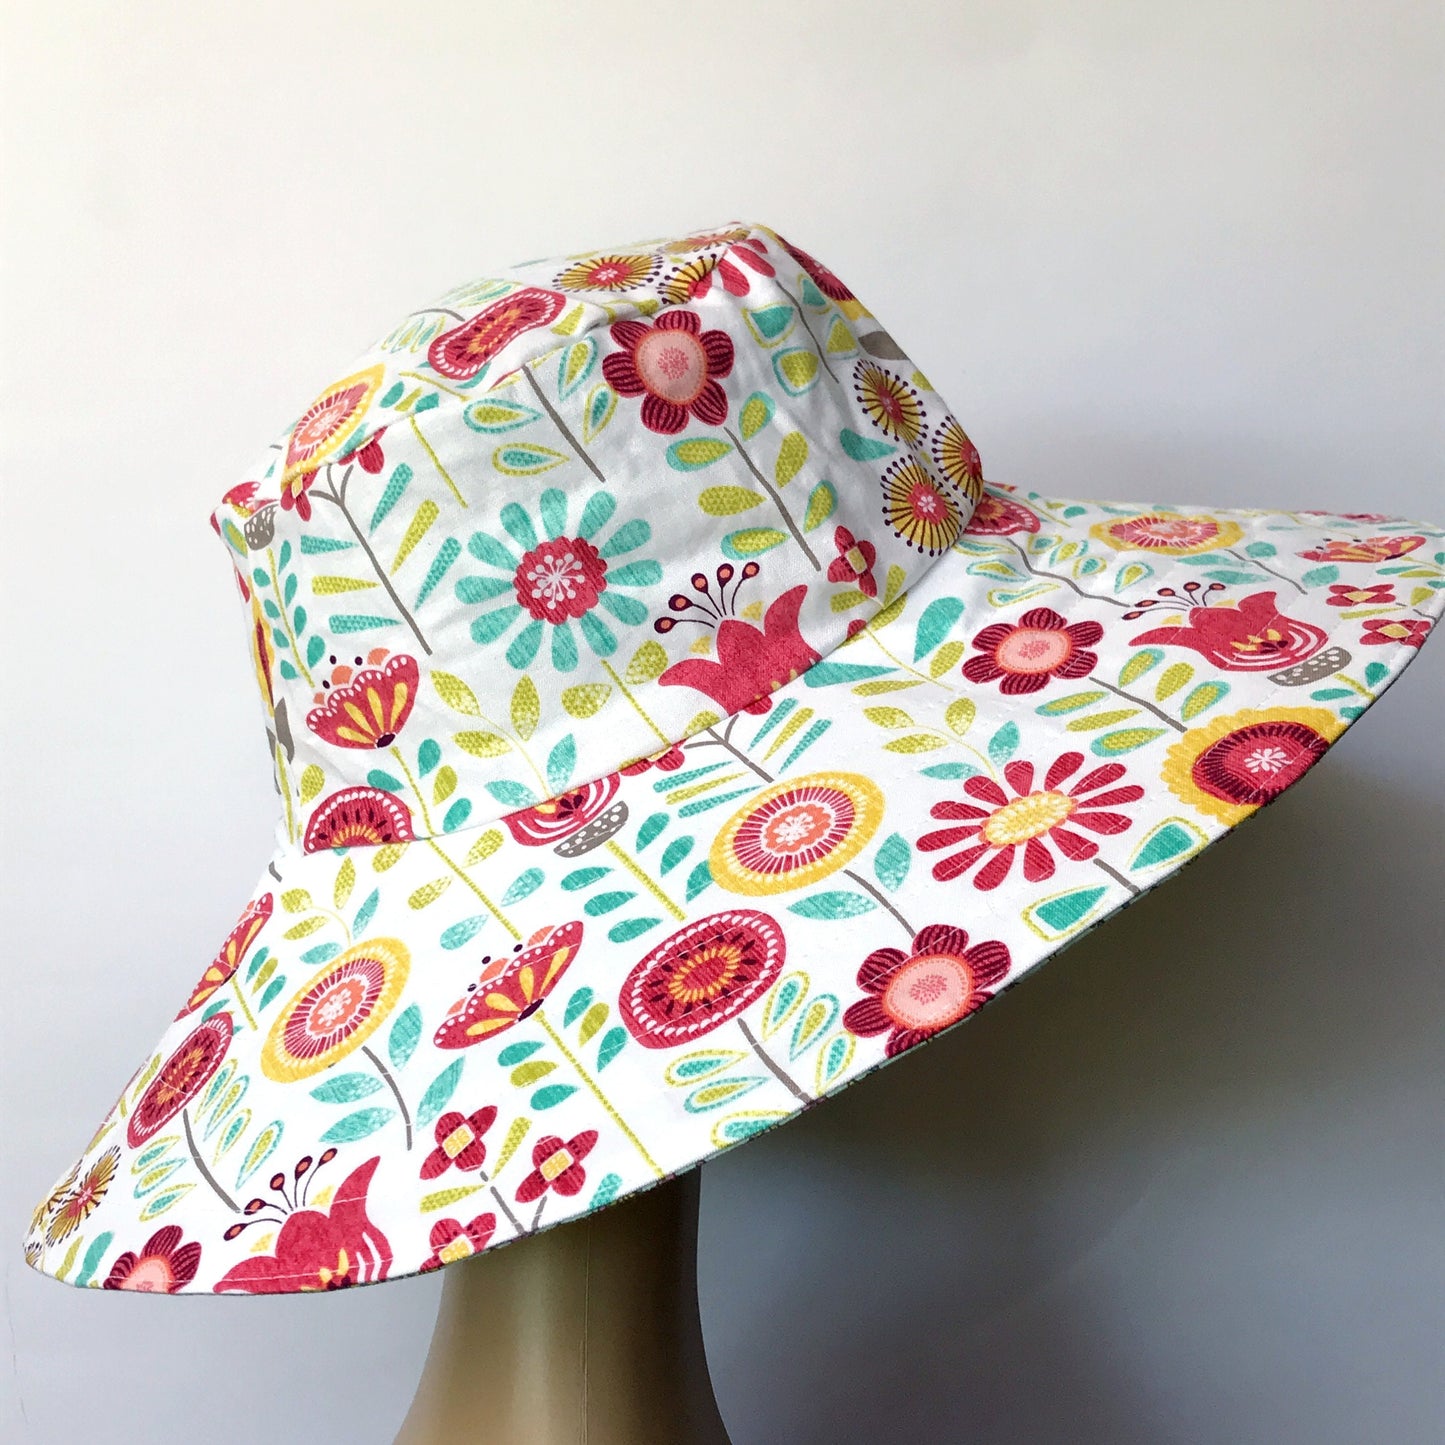 Wide Brim Reversible Sun Hat, Ladies / Girls sizes avail - white floral